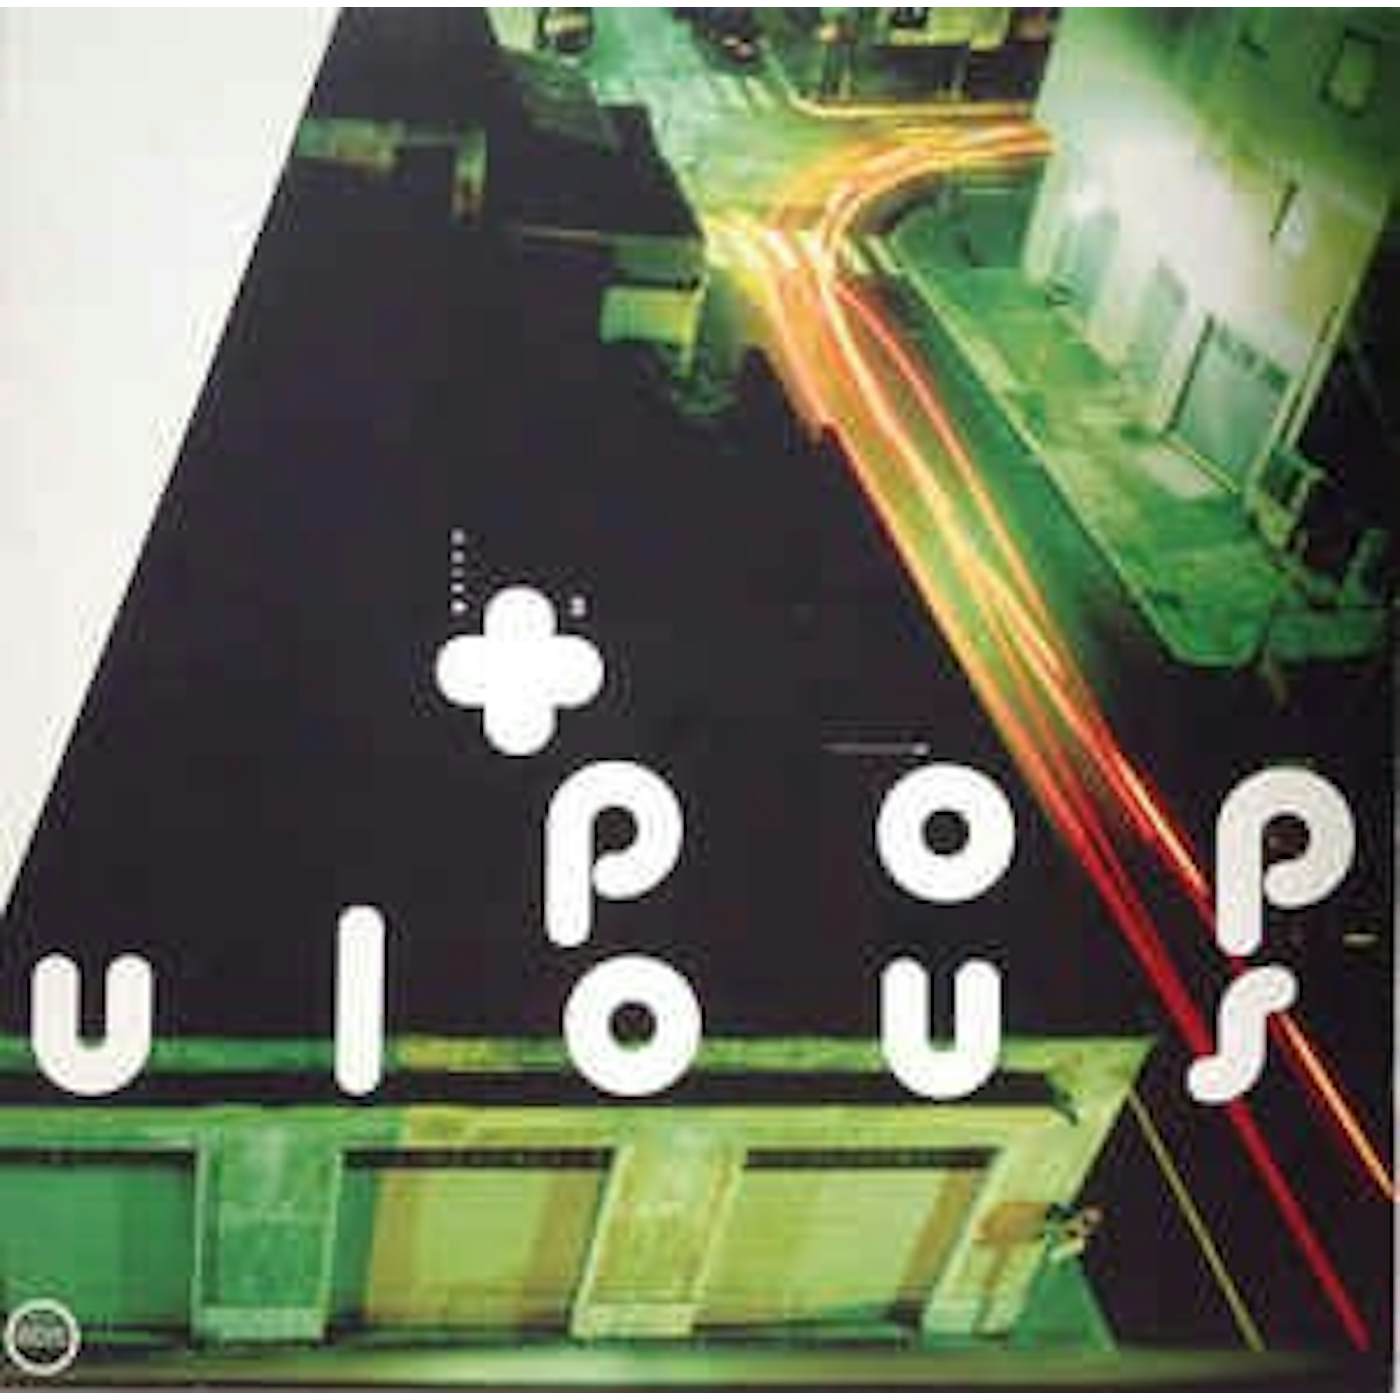 Populous Quipo Vinyl Record